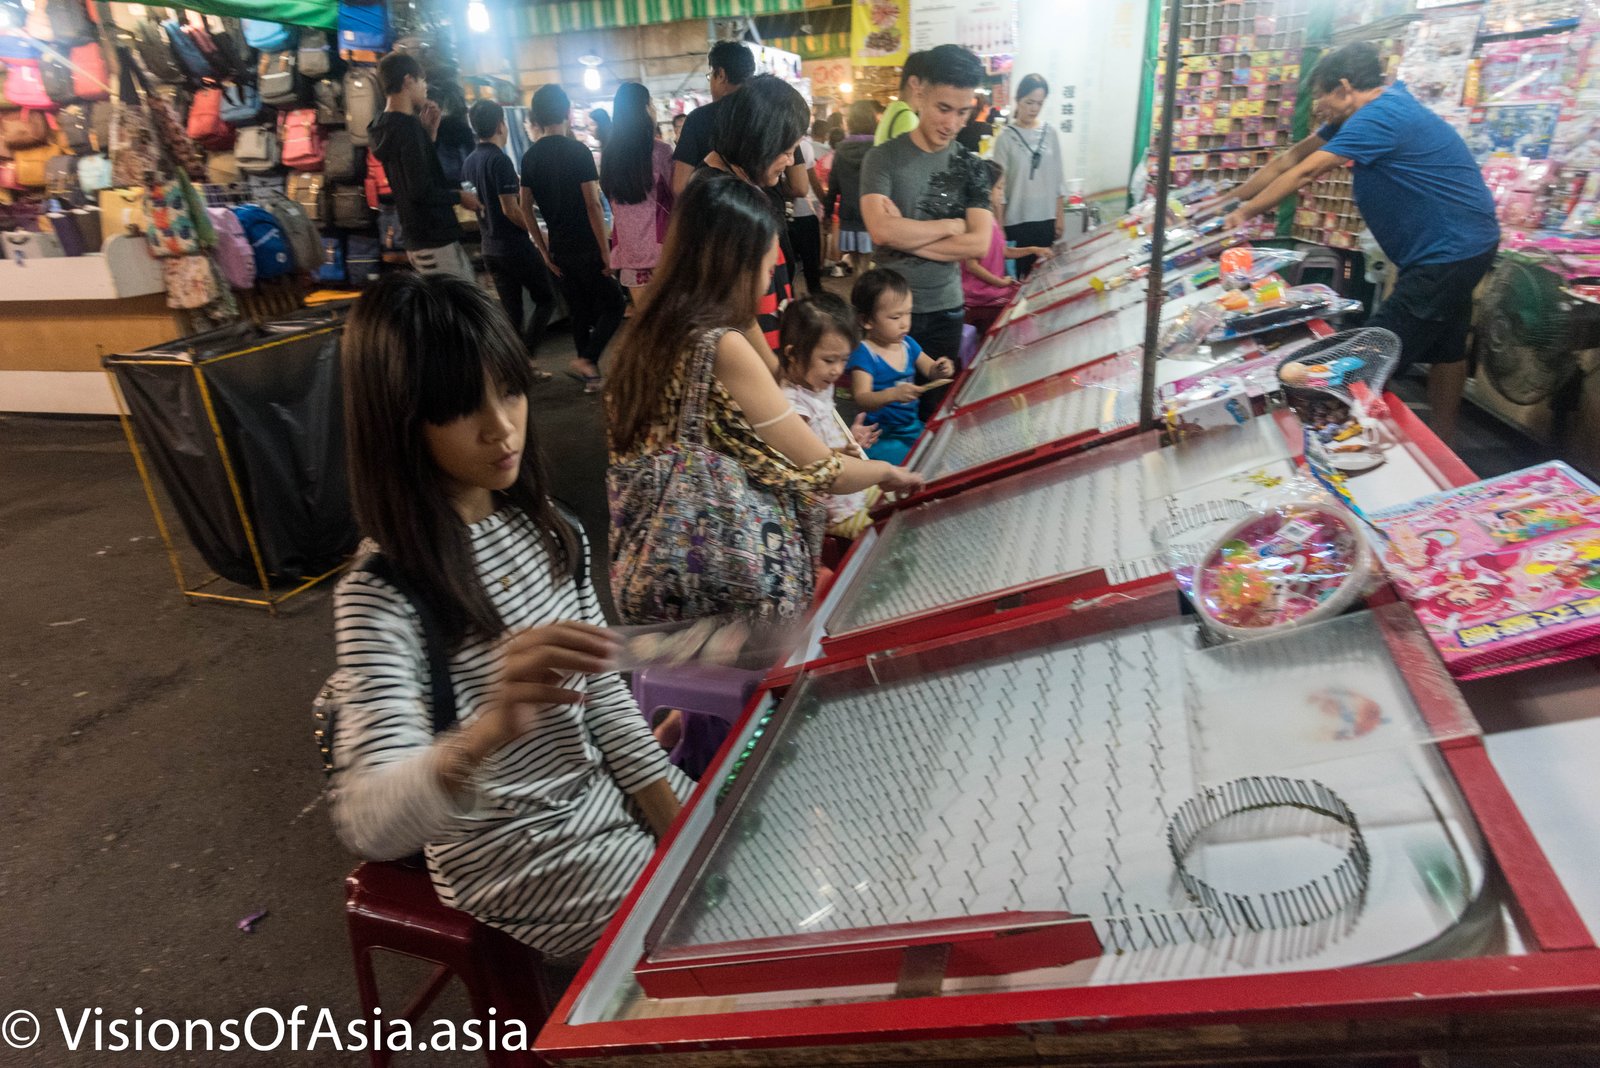 Playing games at Ruifeng Night market